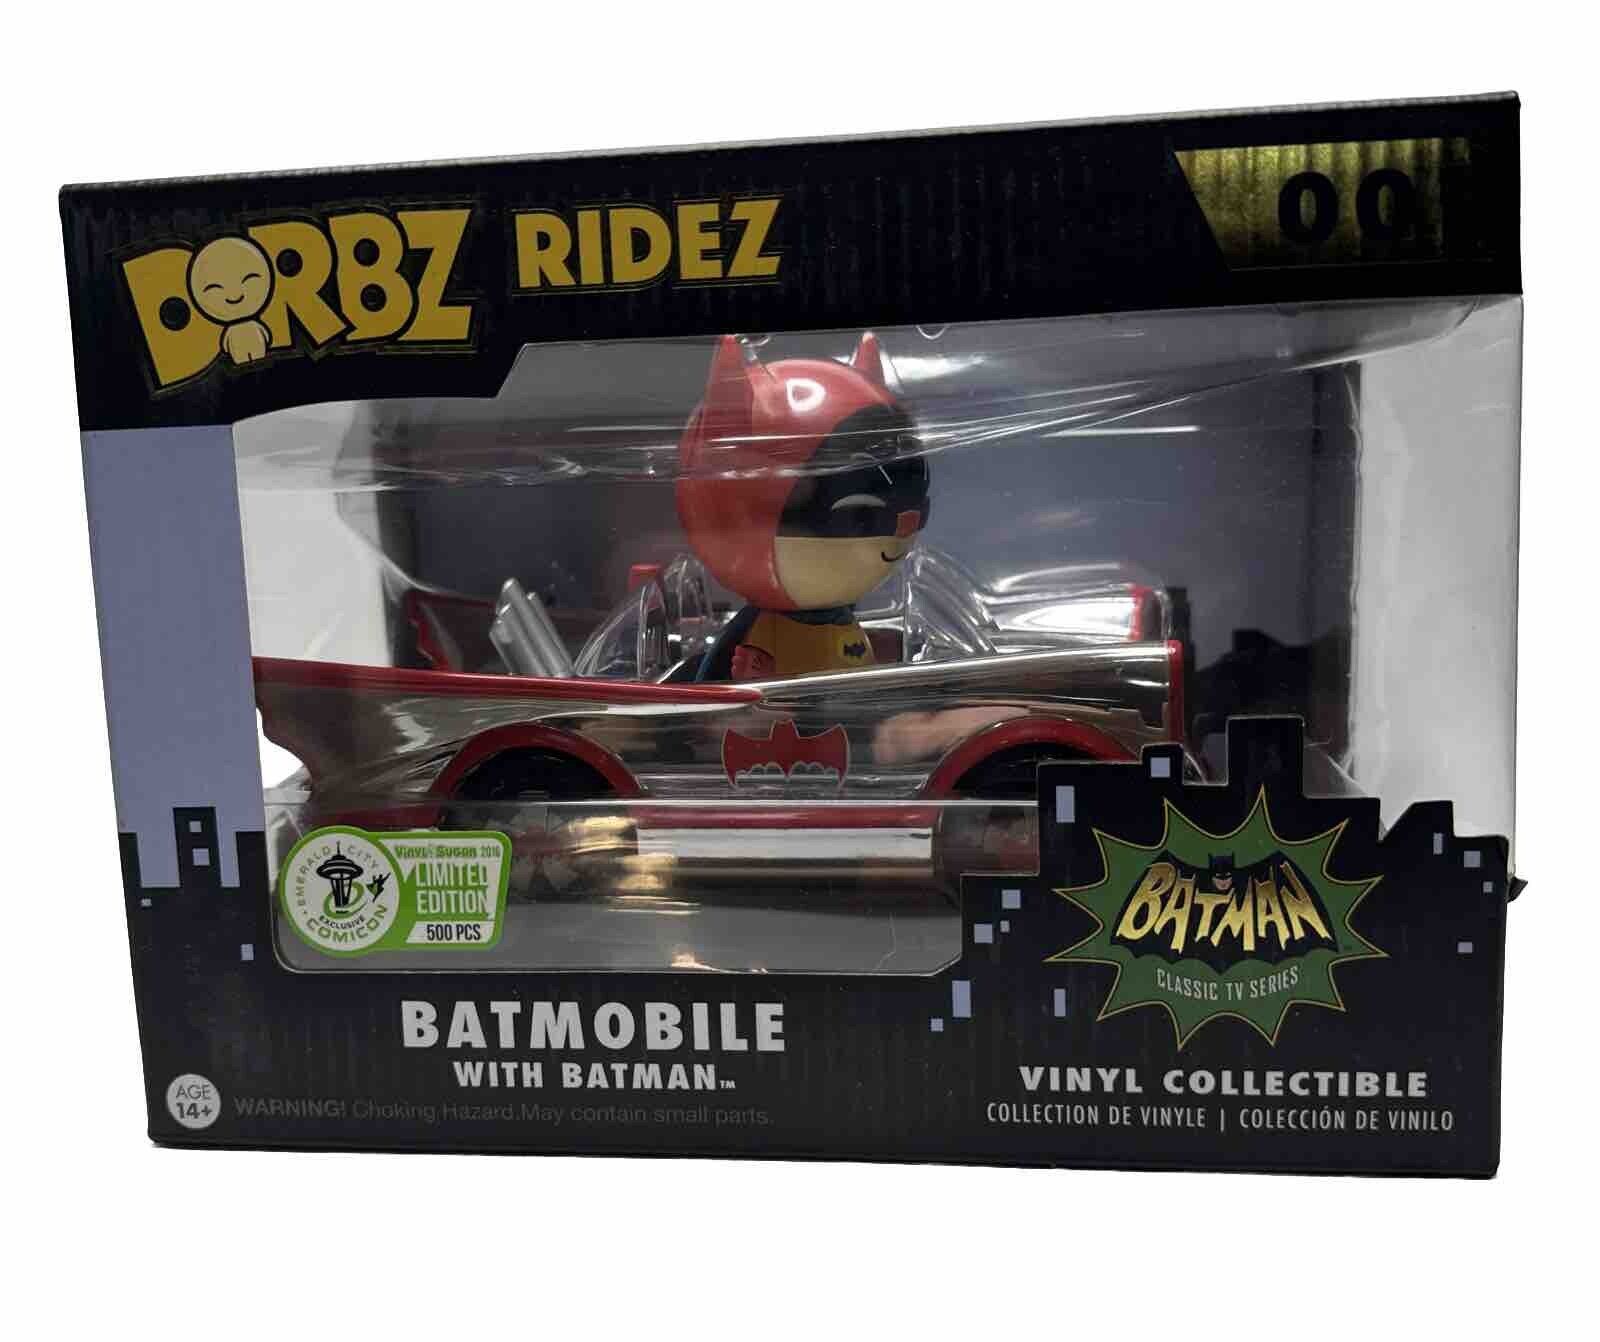 Funko Dorbz Ridez Batmobile with Batman 2016 ECCC Exclusive Limited Edition 500